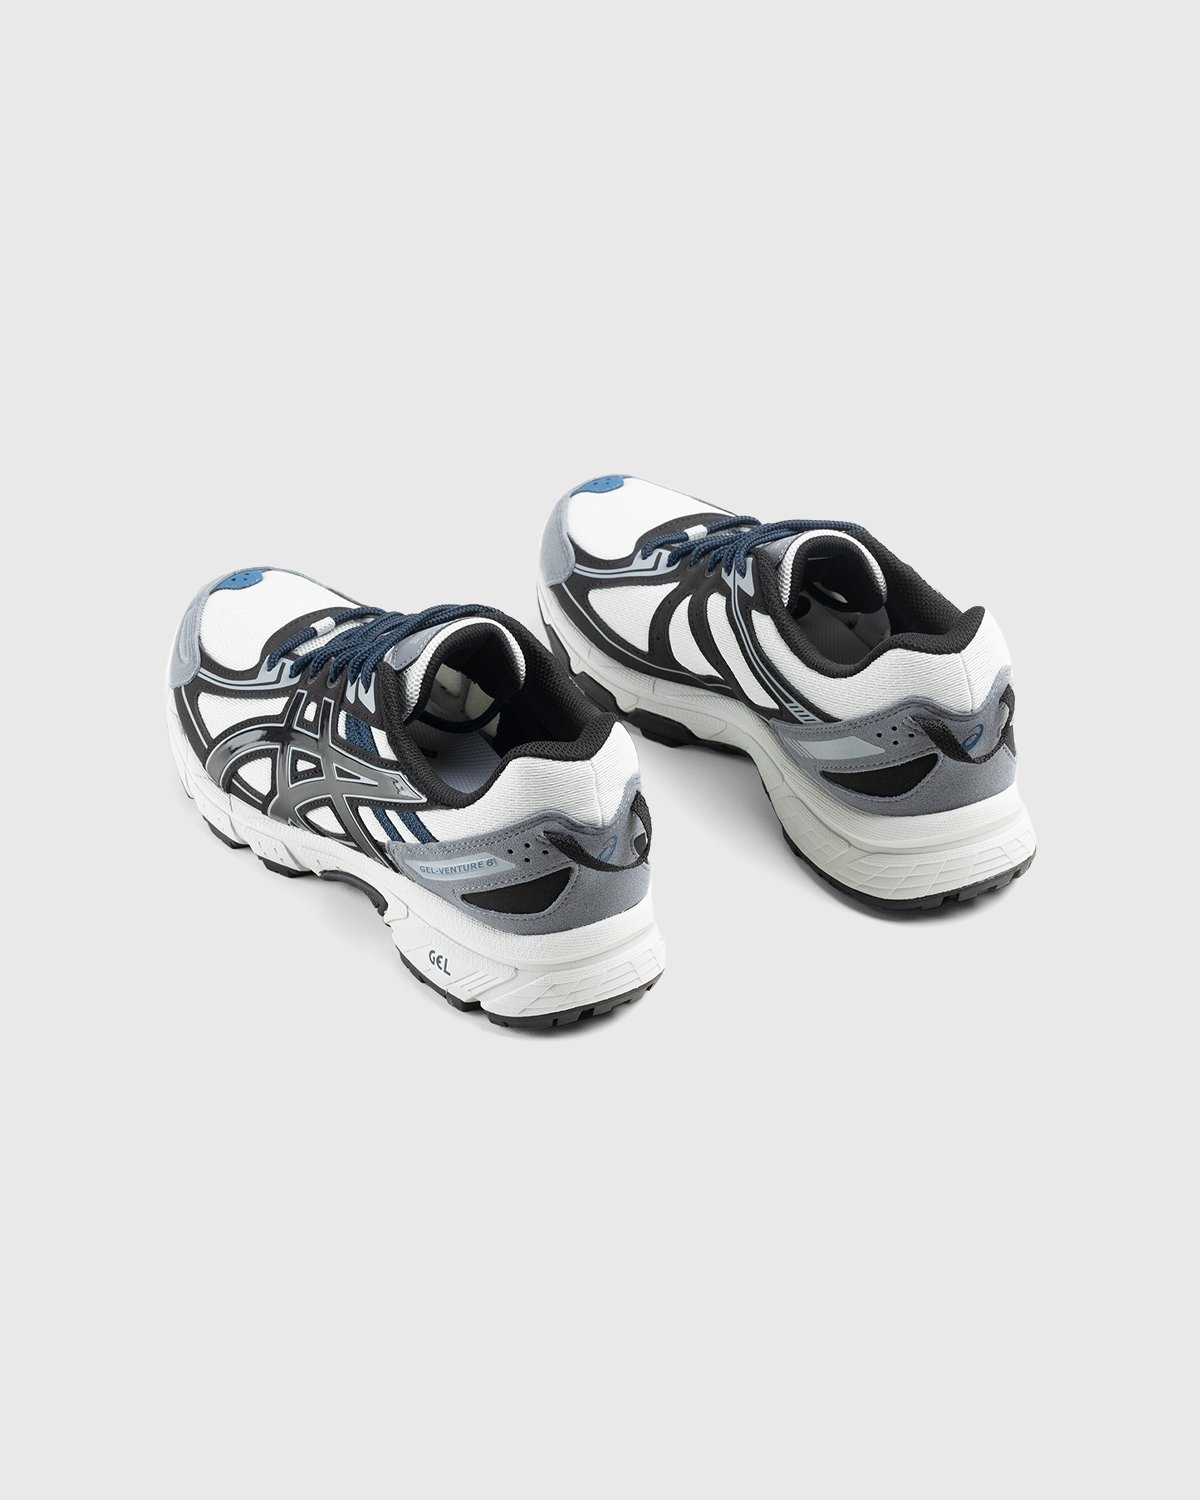 asics – Gel-Venture 6 Glacier Grey Black - Sneakers - Grey - Image 4